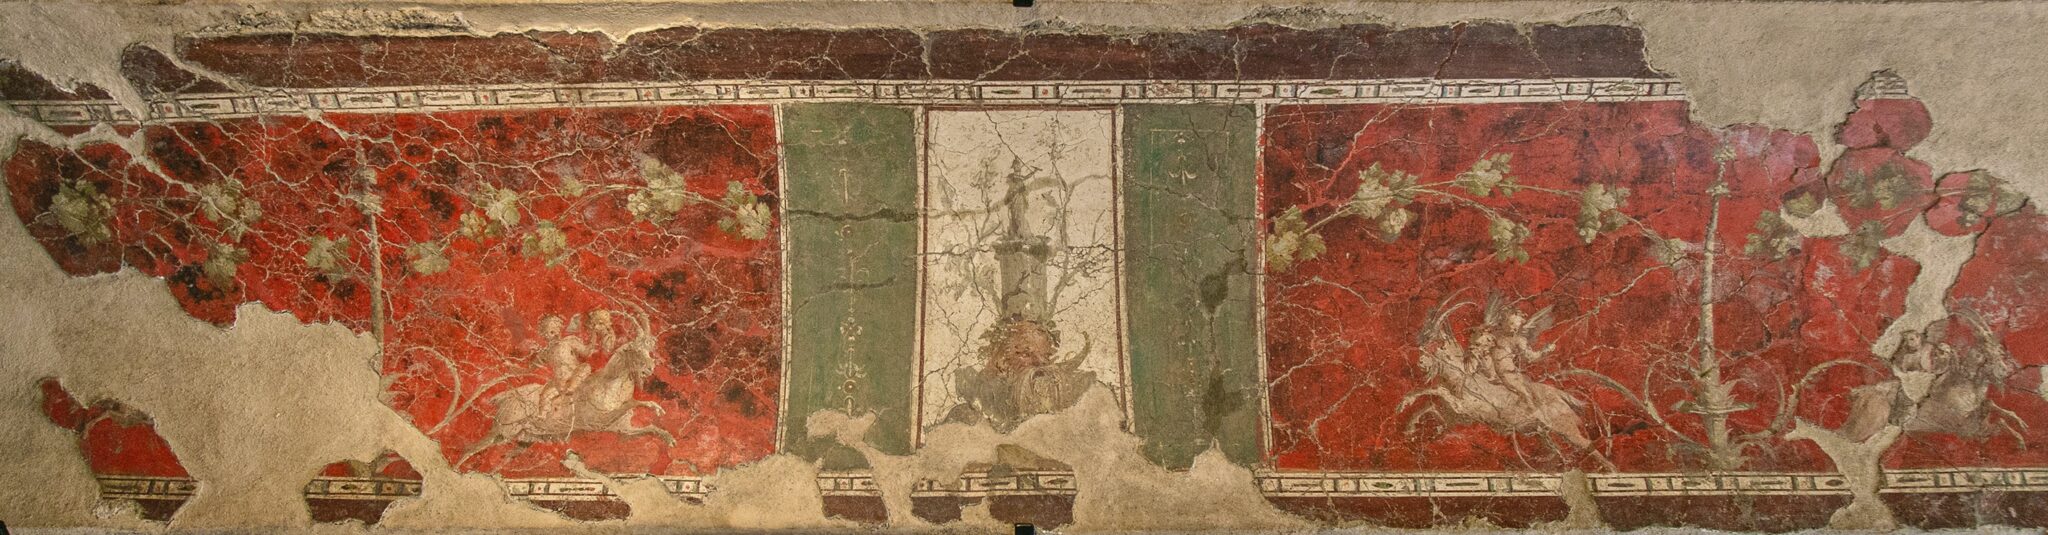 Frescoed domus under Baths of Caracalla opens